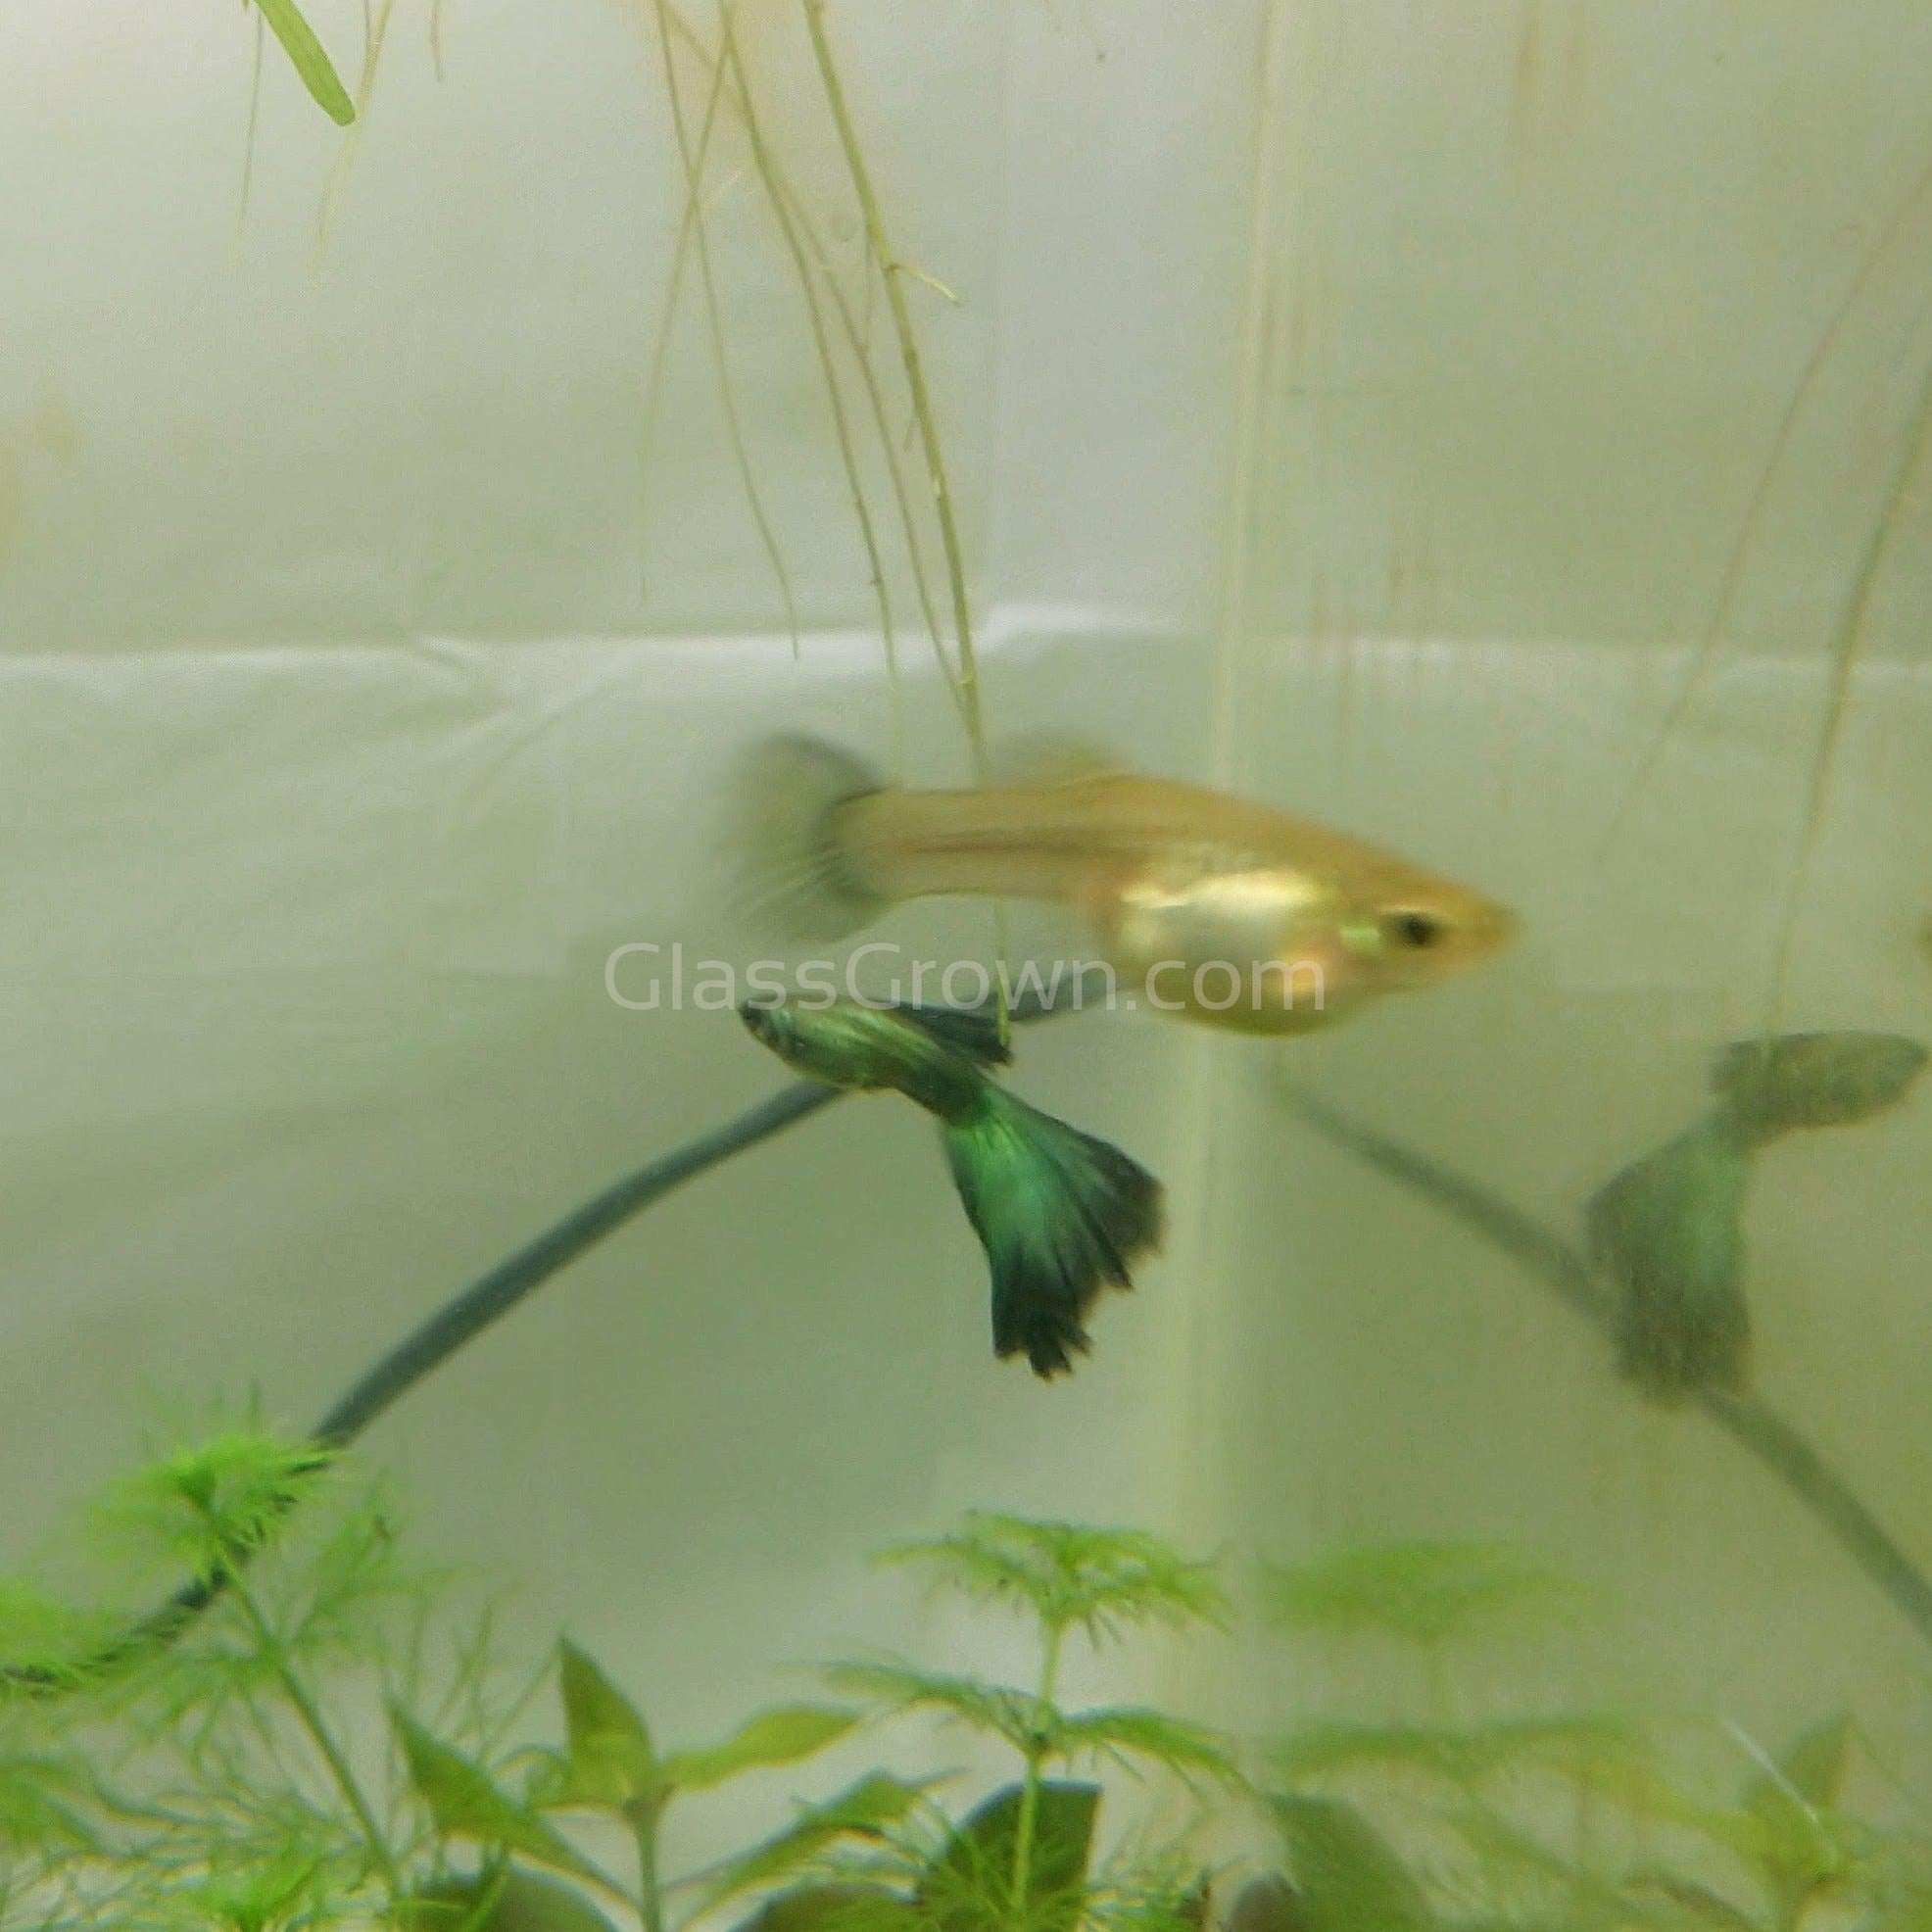 green guppy fish